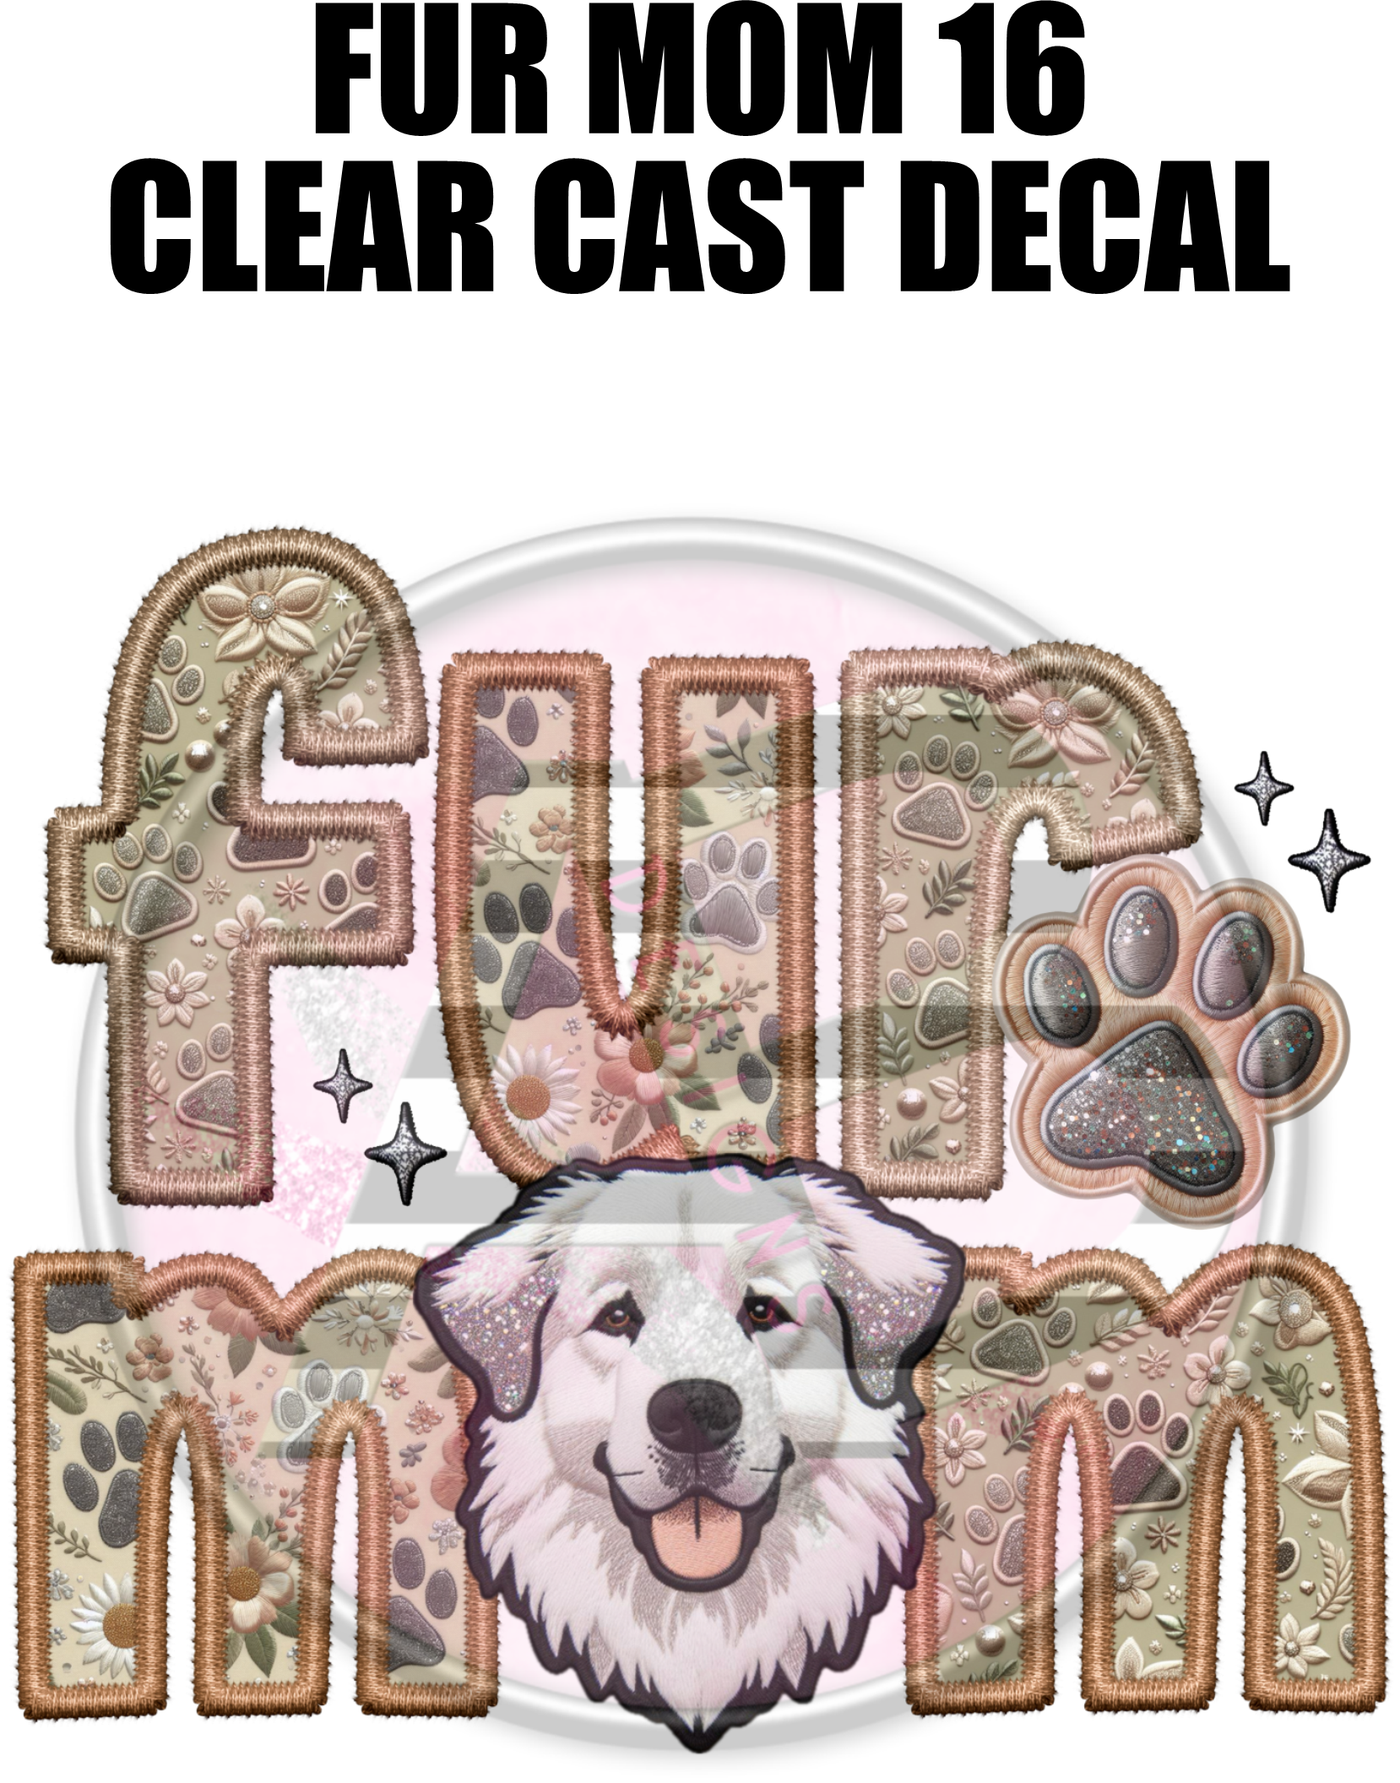 Fur Mom 16 - Clear Cast Decal